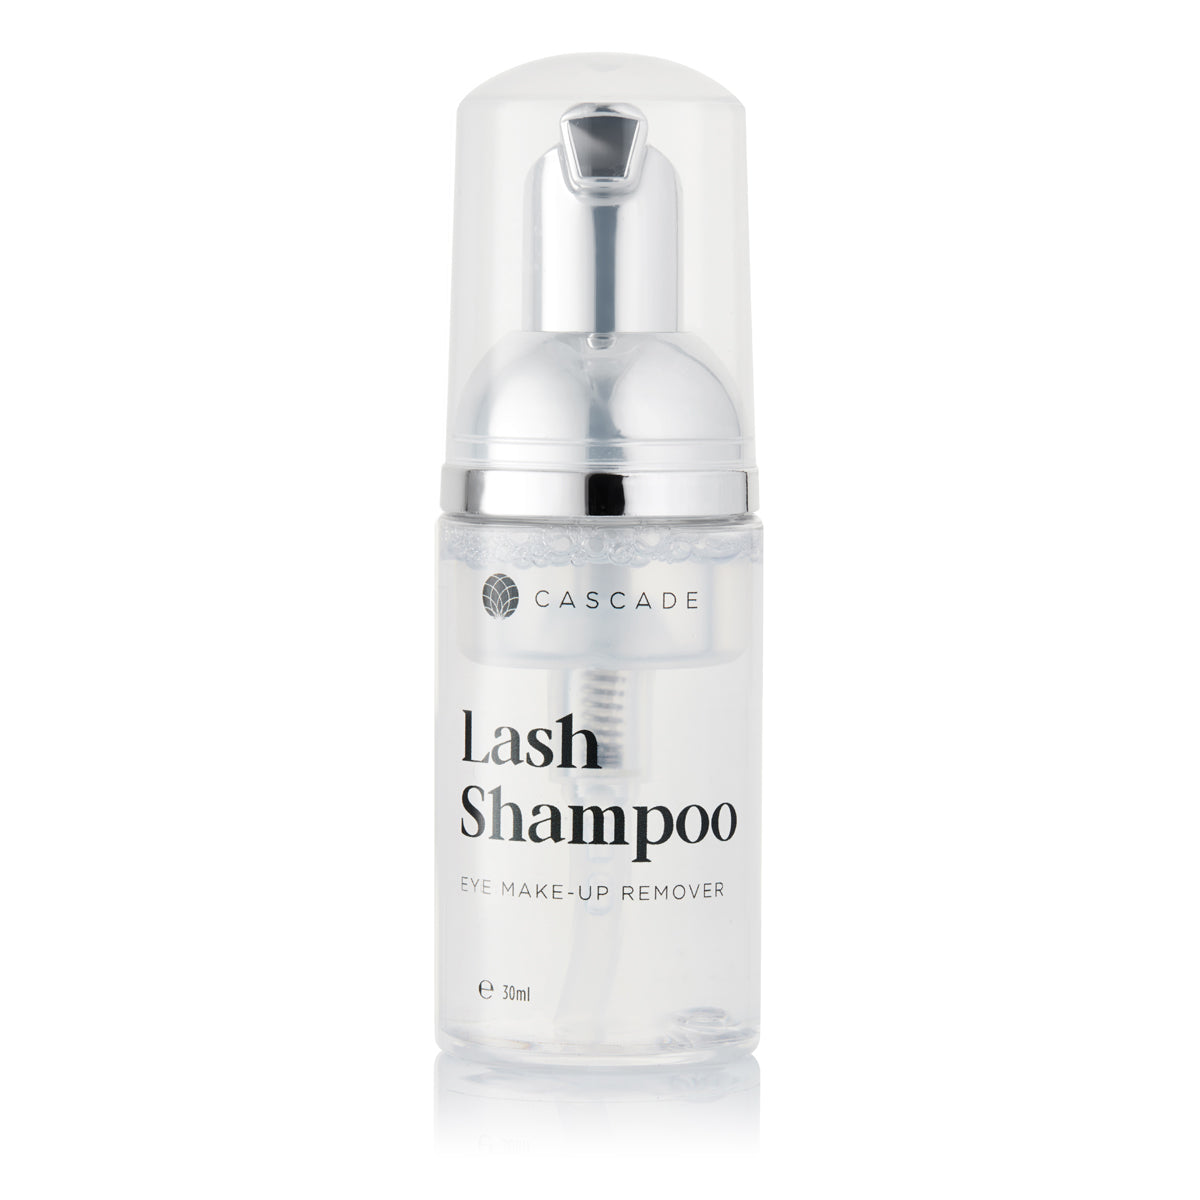 Lash Shampoo/Eye Make-up Remover